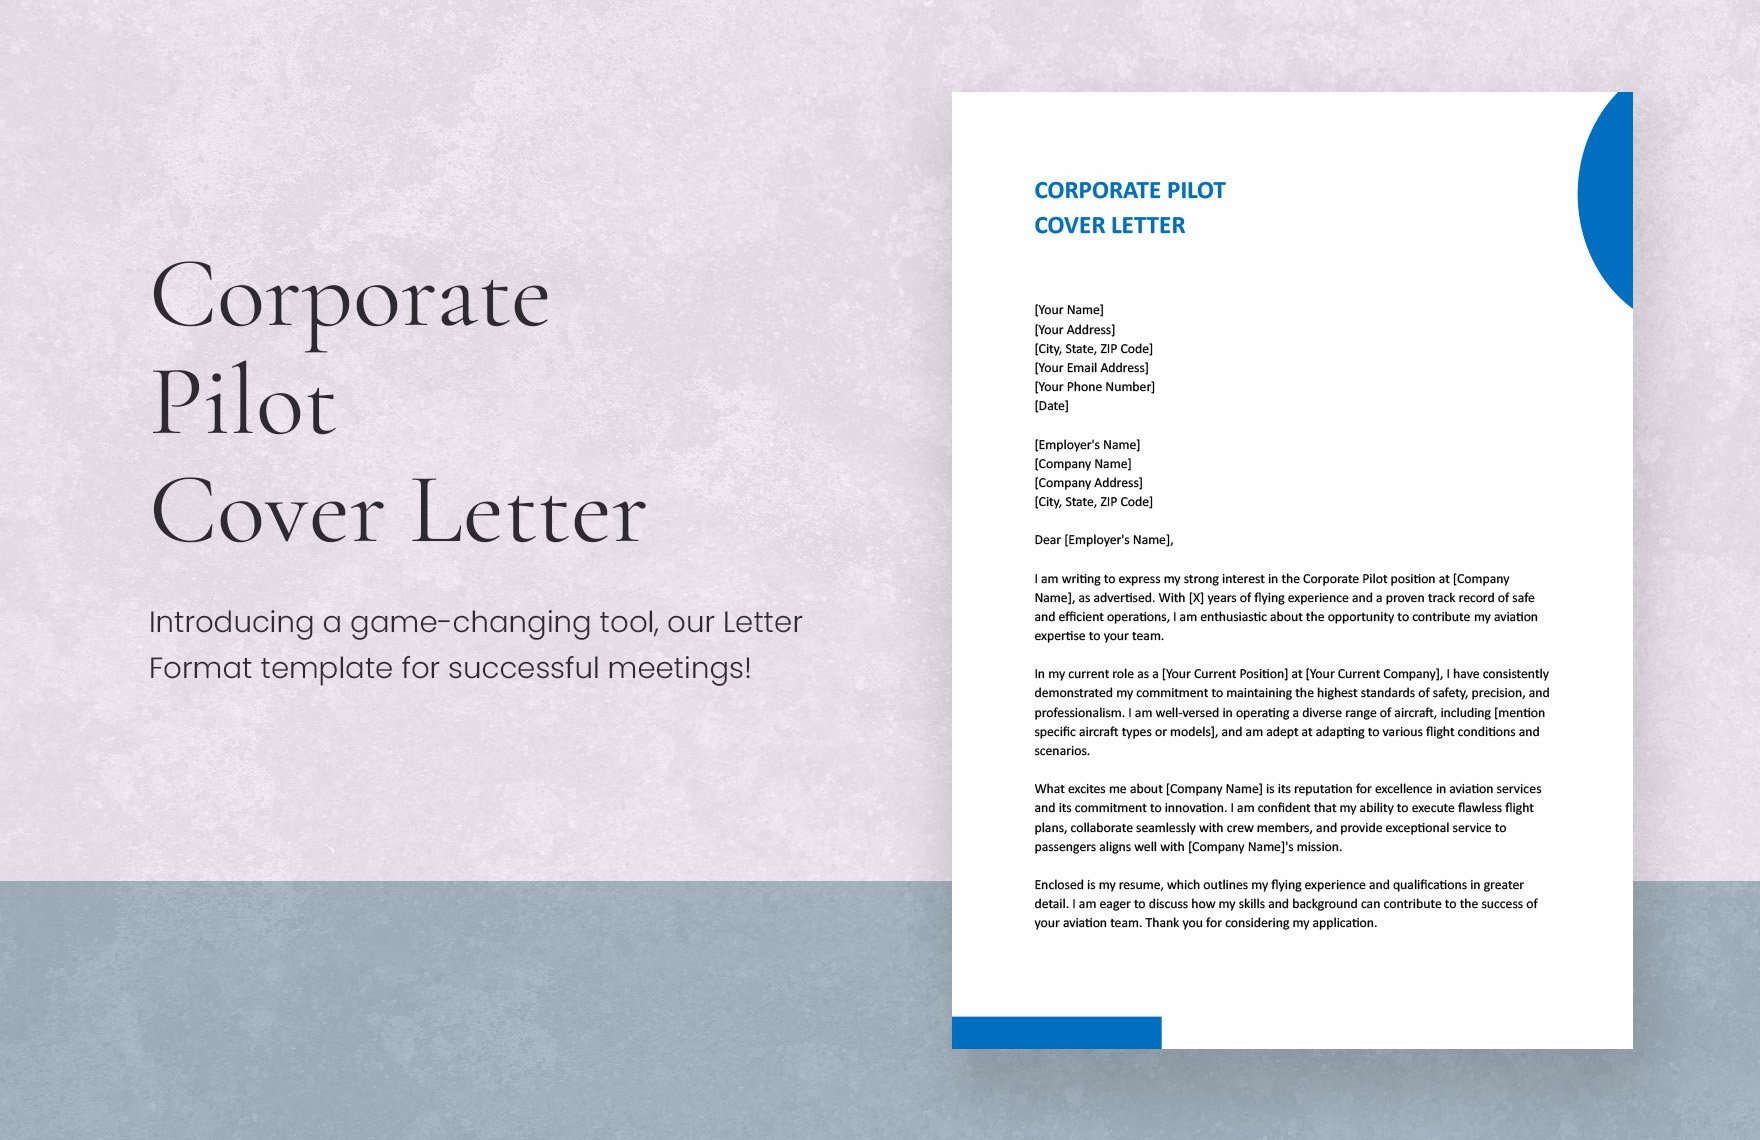 Corporate Pilot Cover Letter